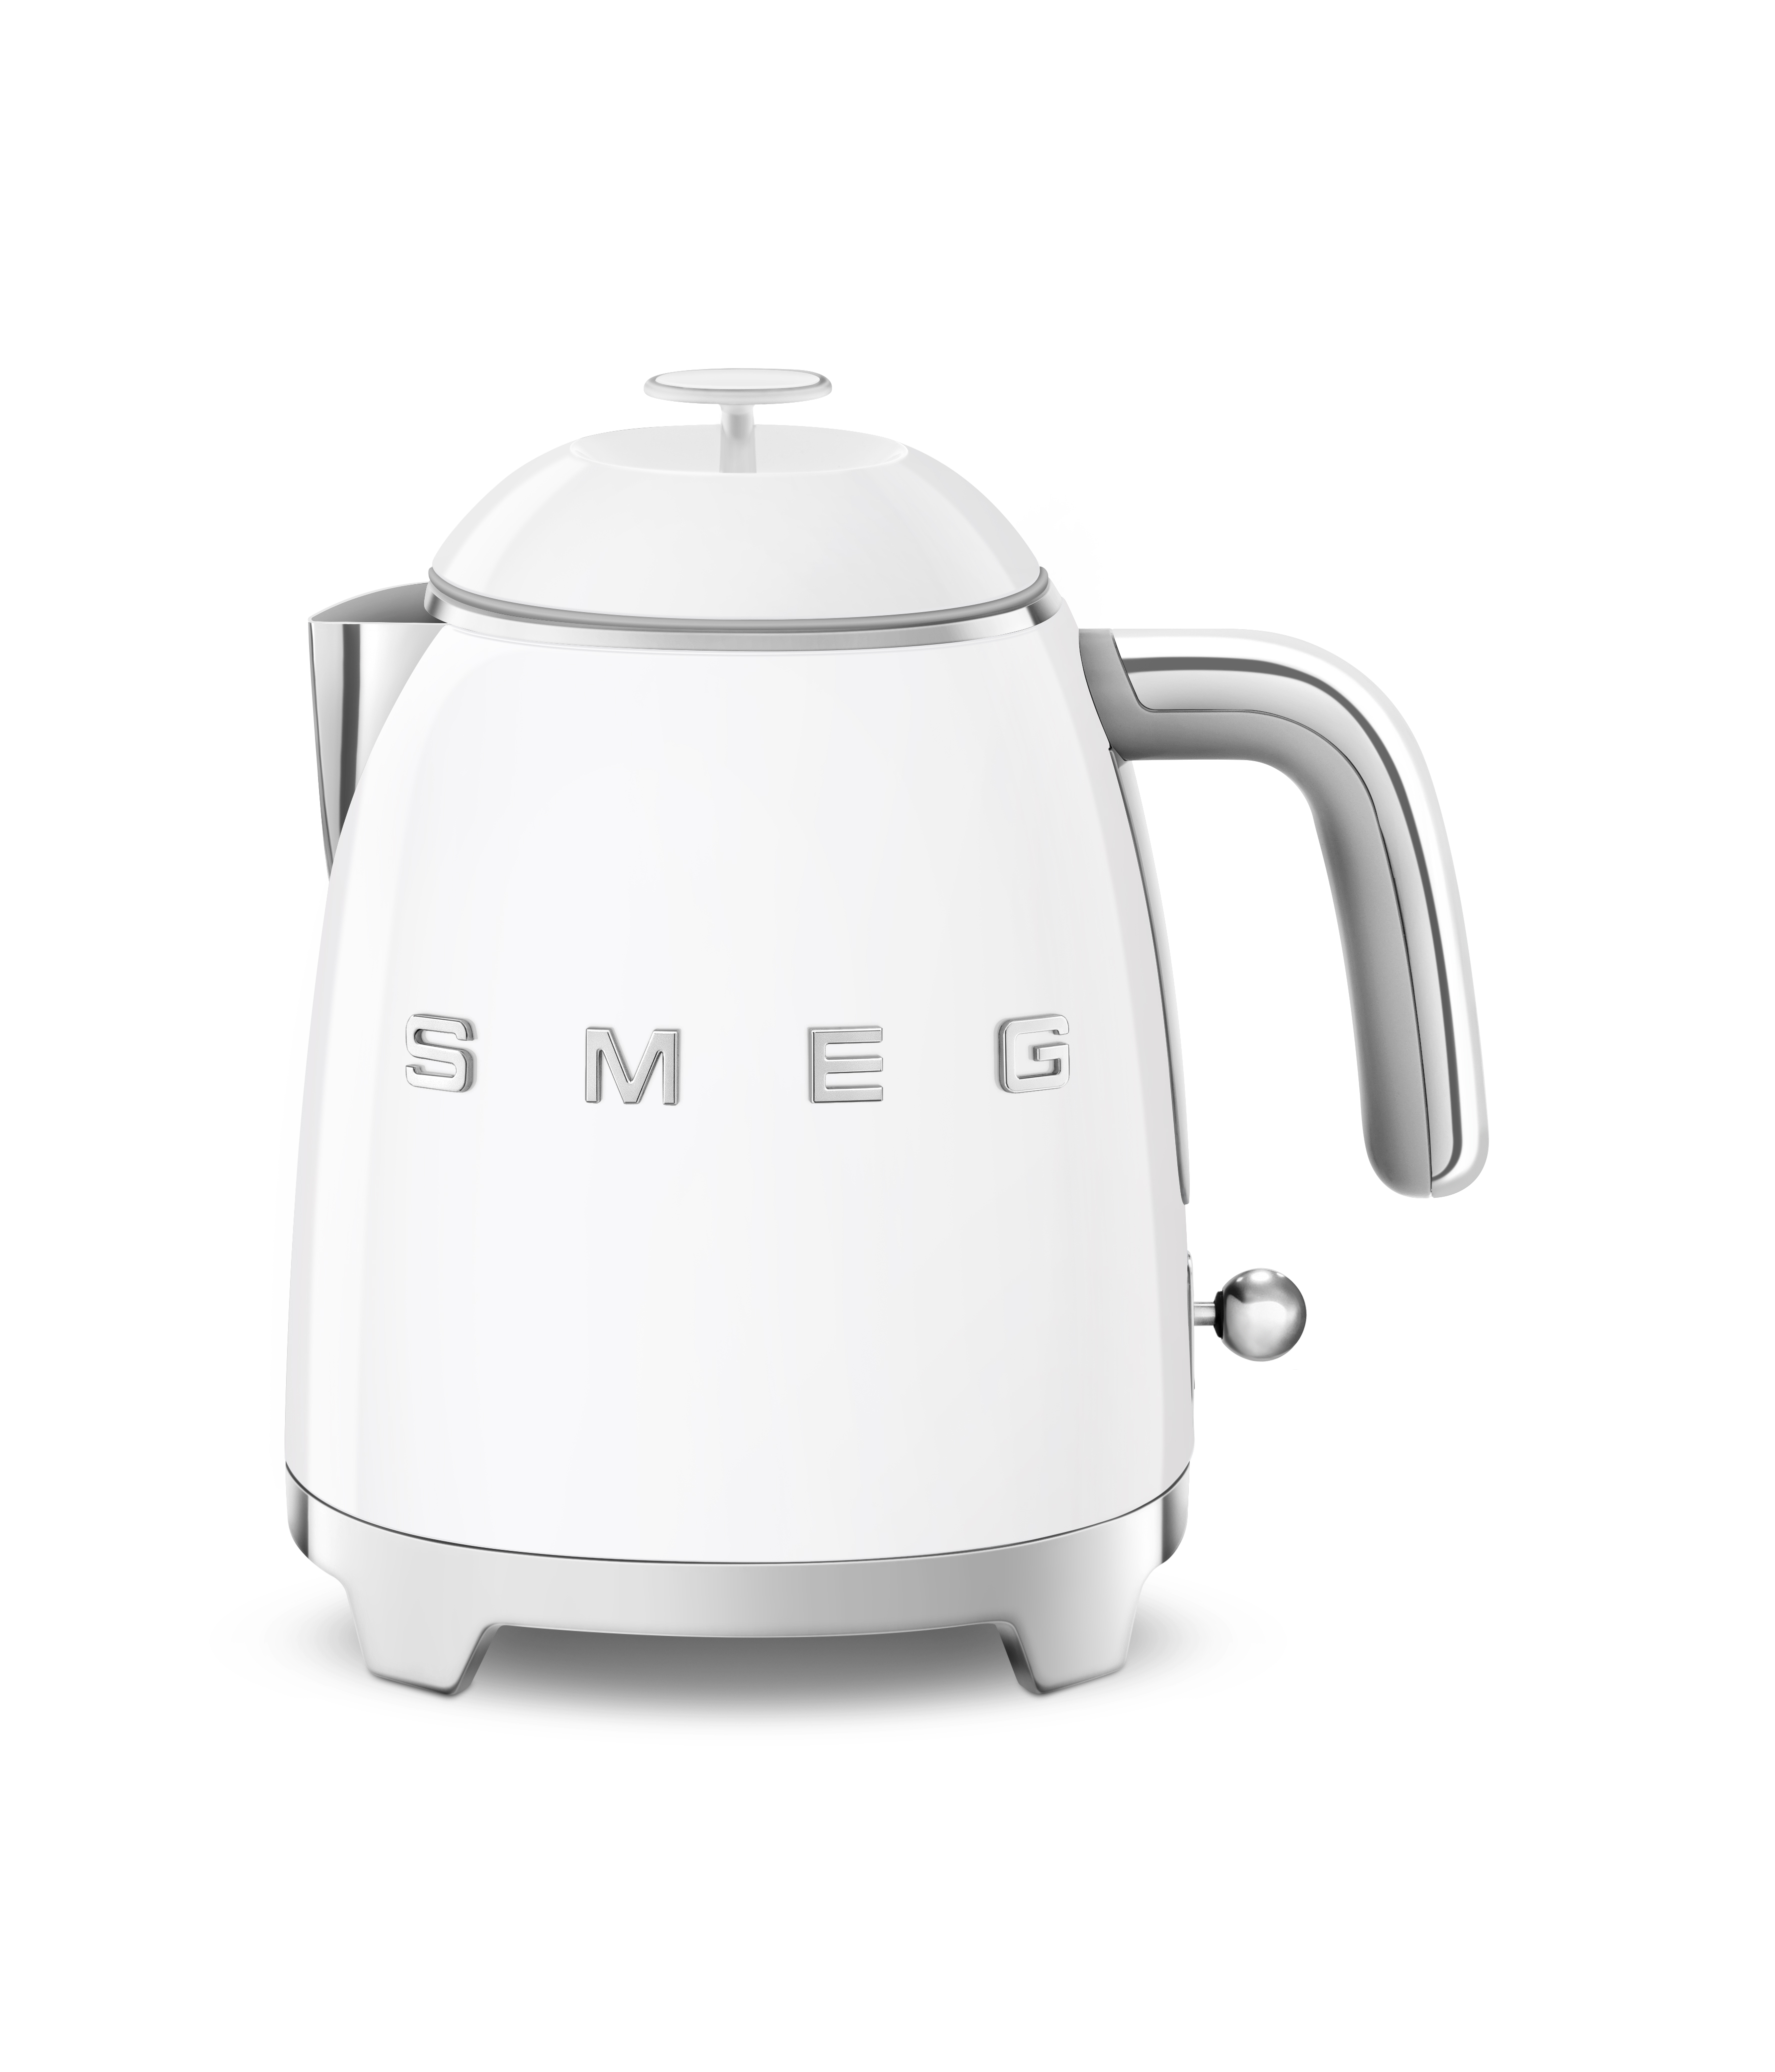 W SMEG - - Wasserkocher weiß - Mini 800 1400